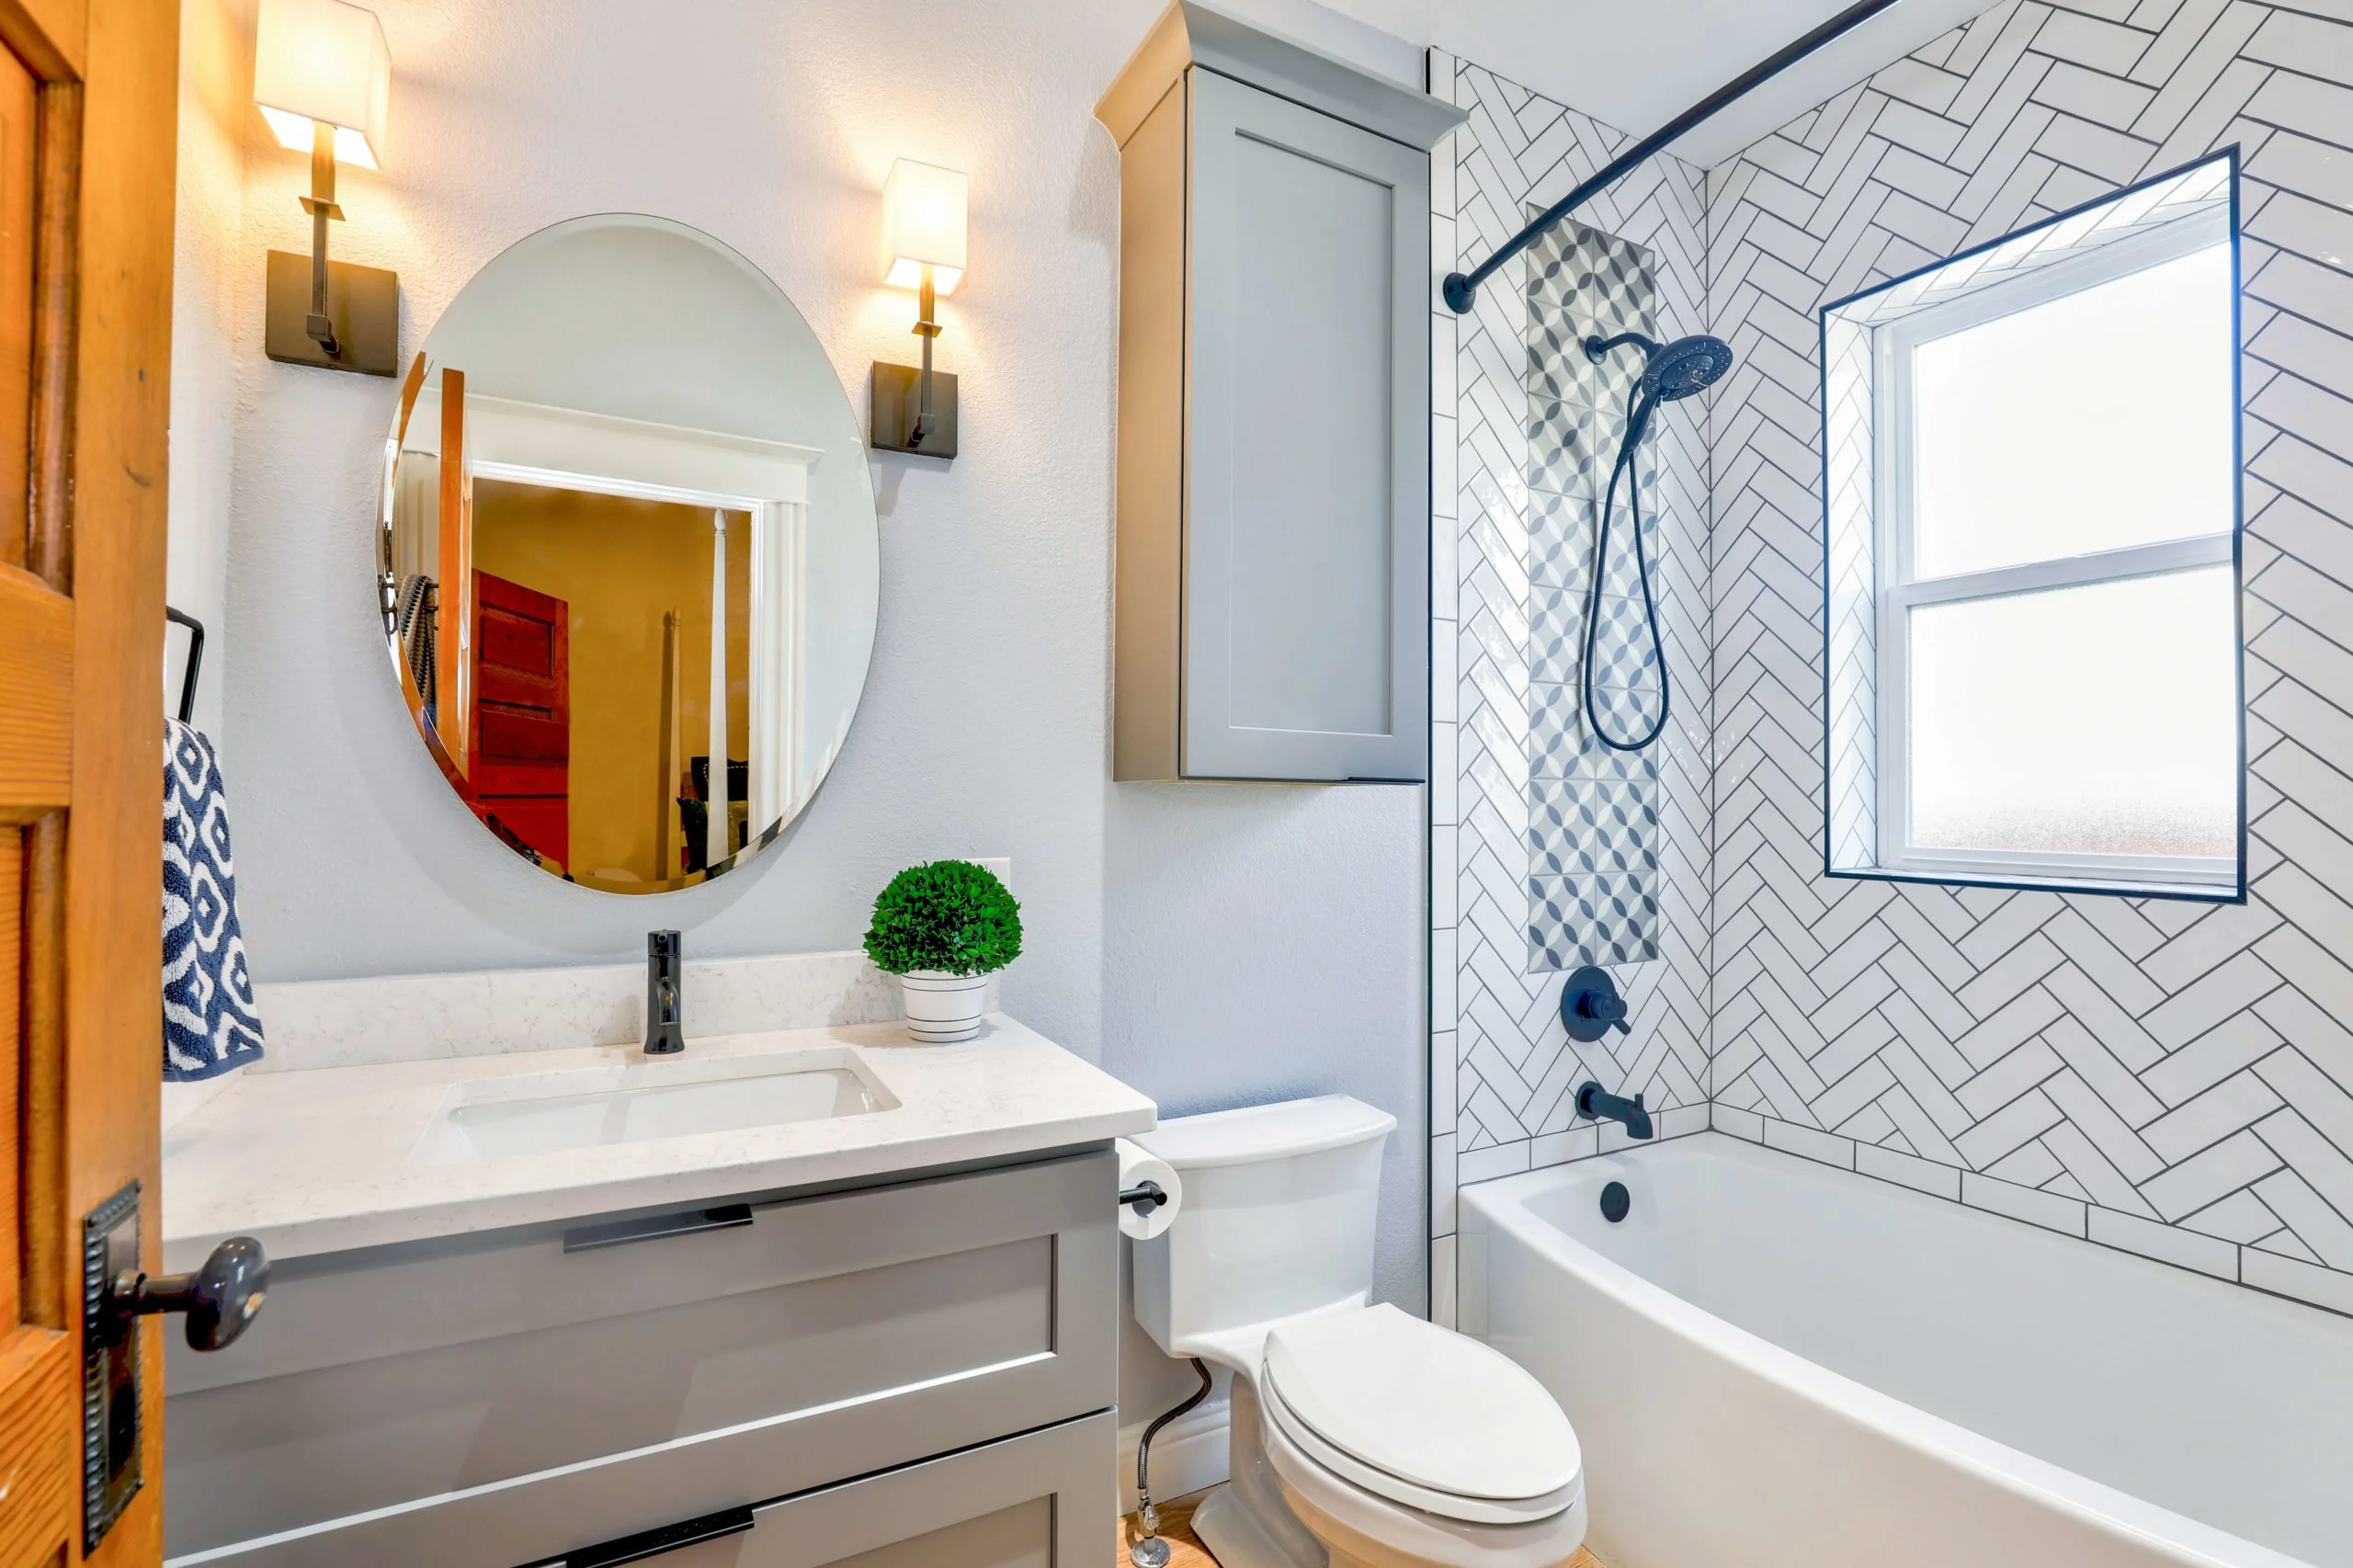 shower or tub bathroom remodel